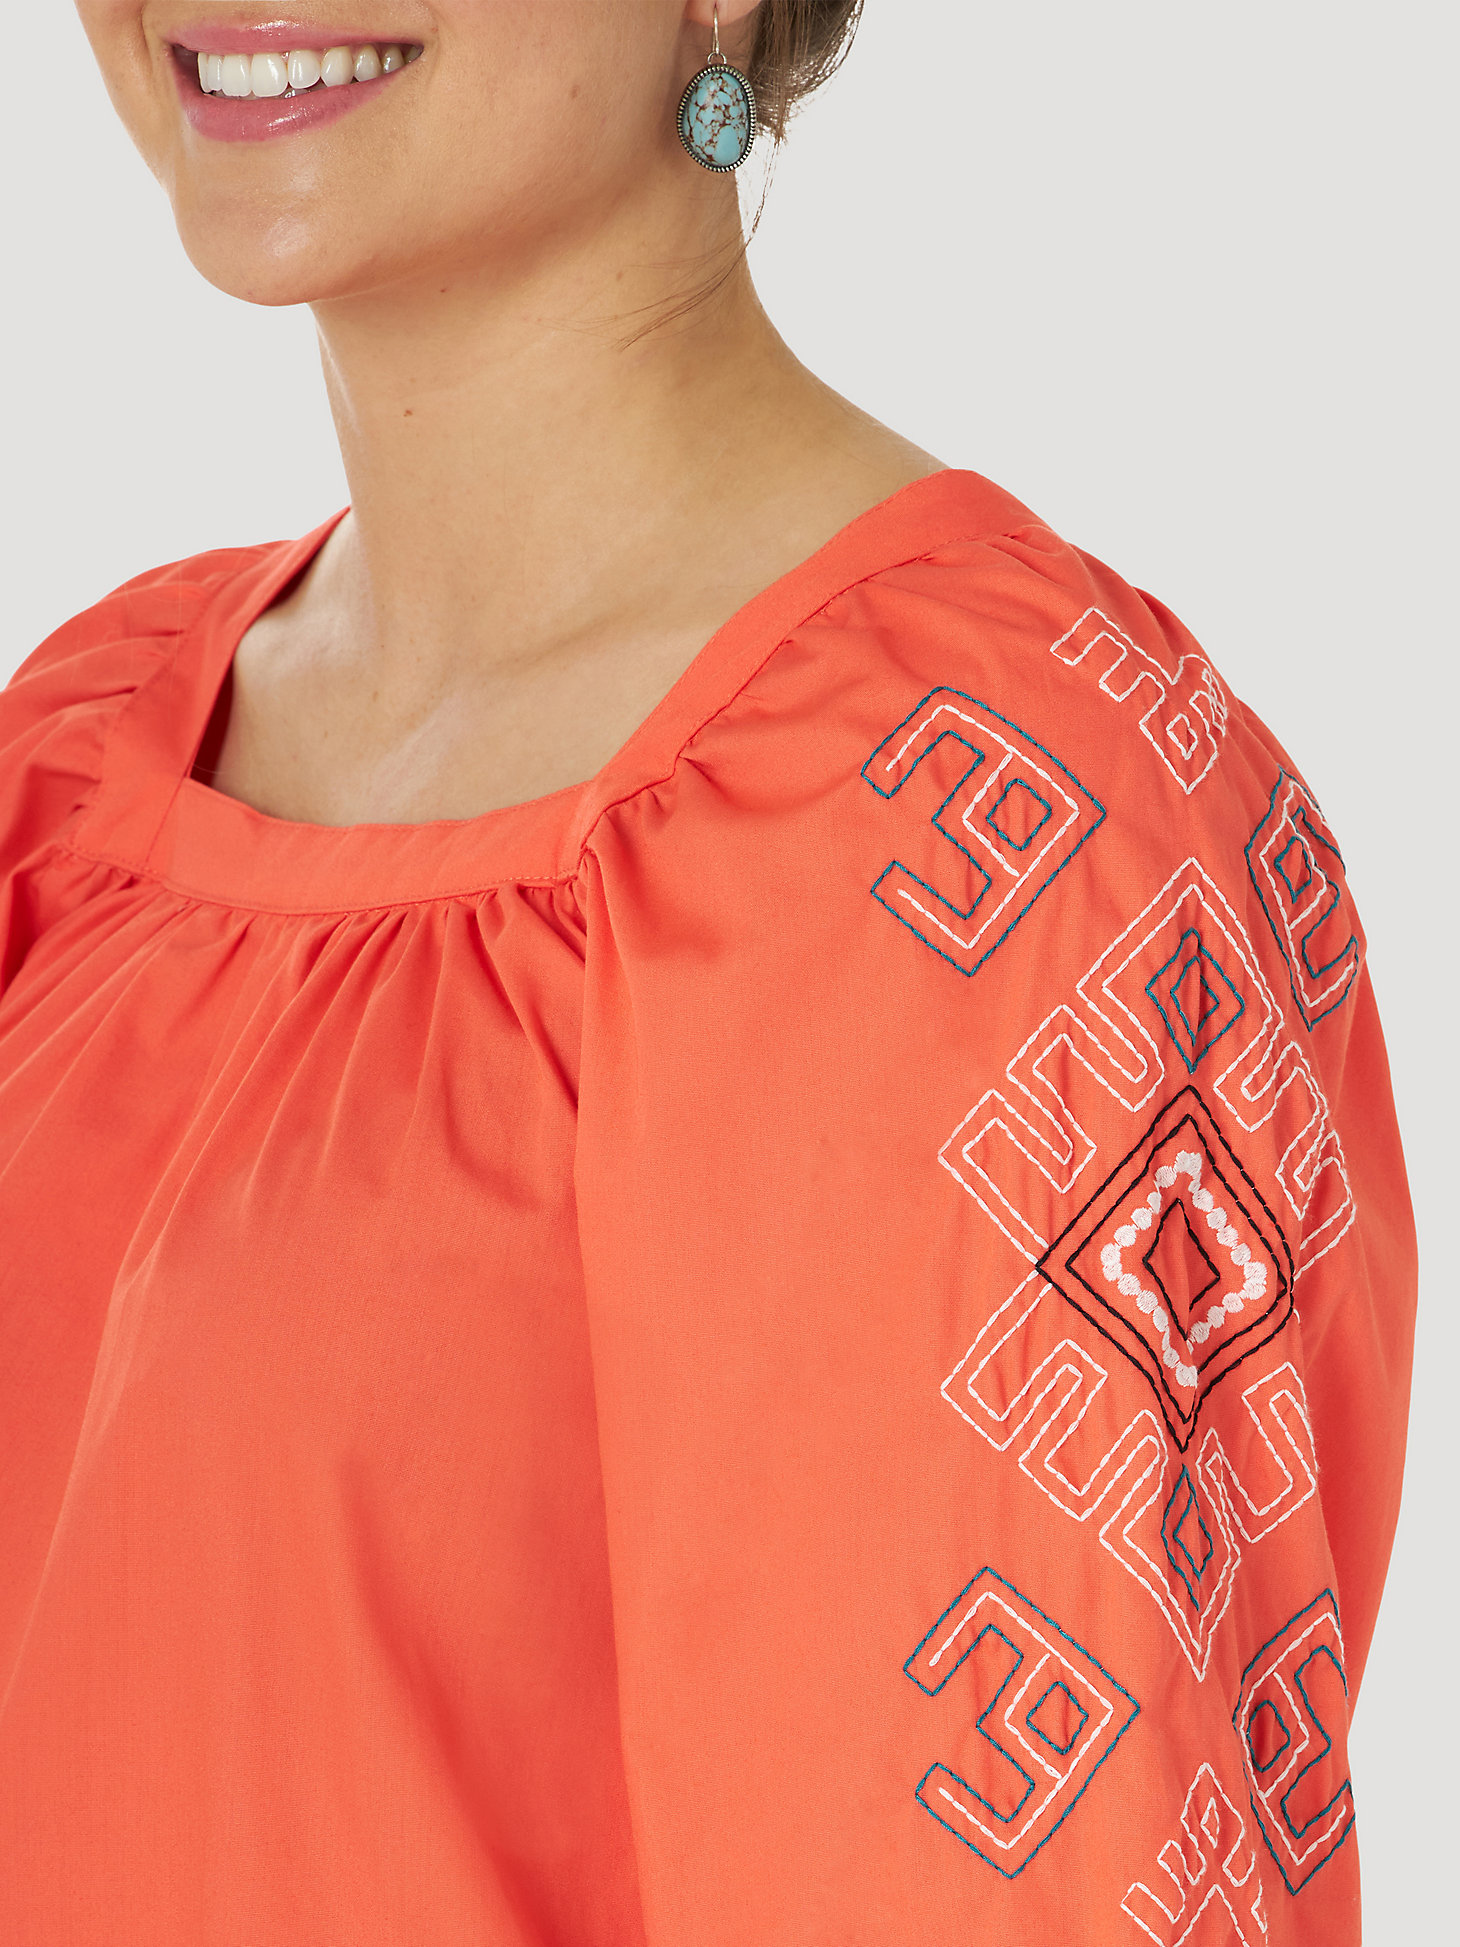 Women's Embroidered Sleeve Top in Orange alternative view 2